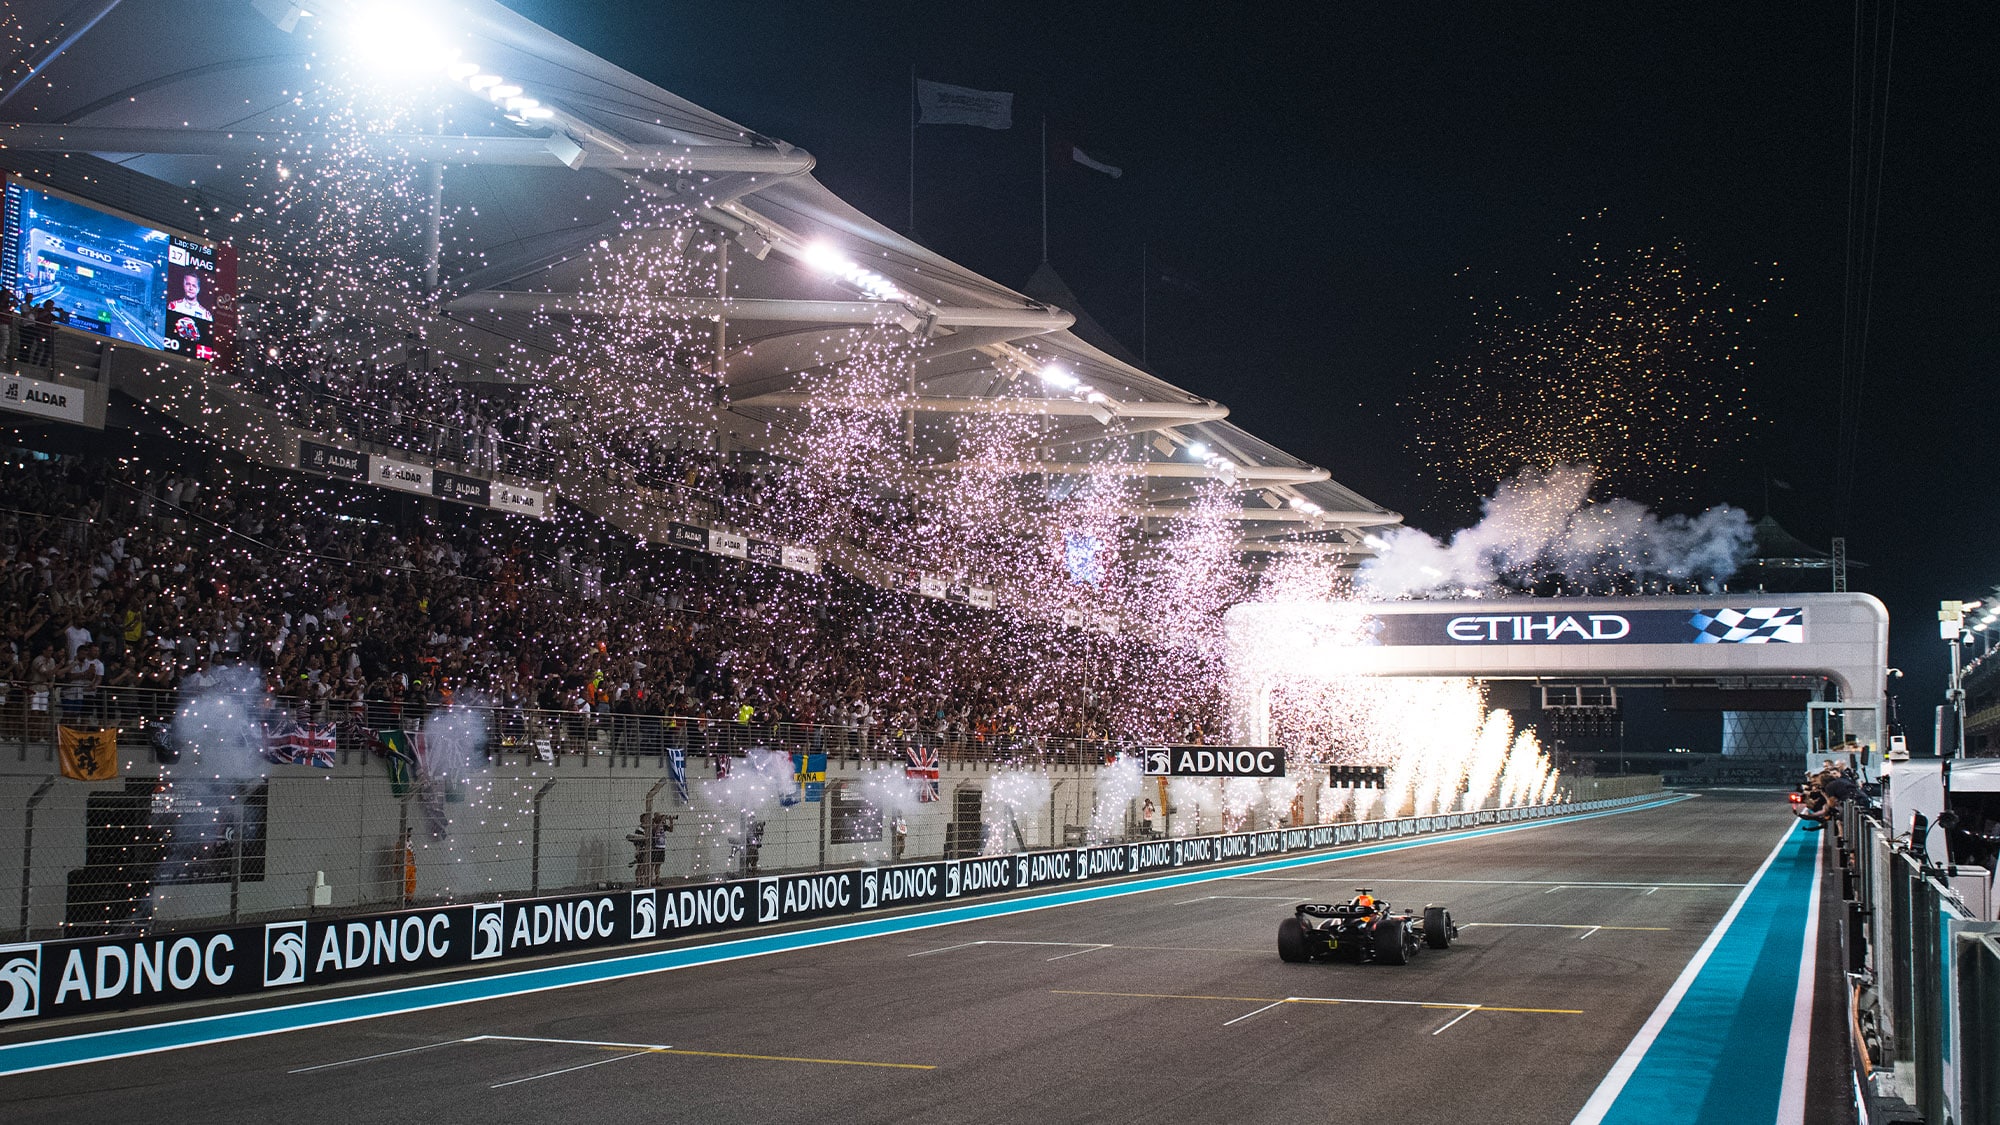 Max Verstappen captures F1 title by winning Abu Dhabi Grand Prix